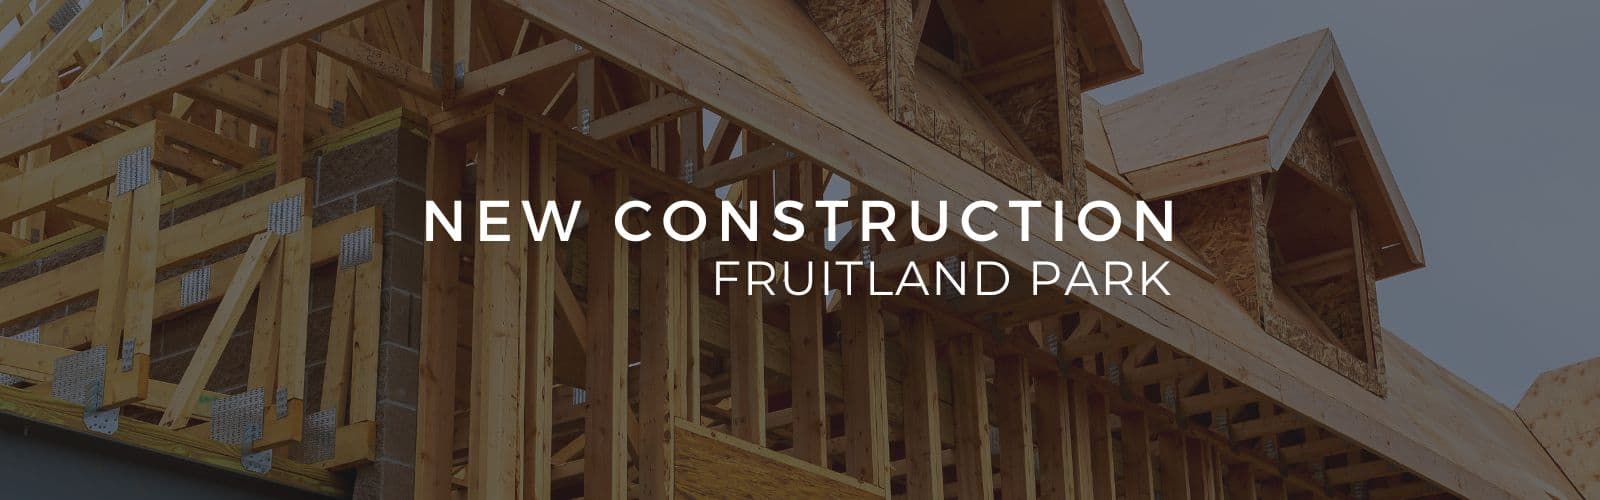 New Construction Fruitland Park